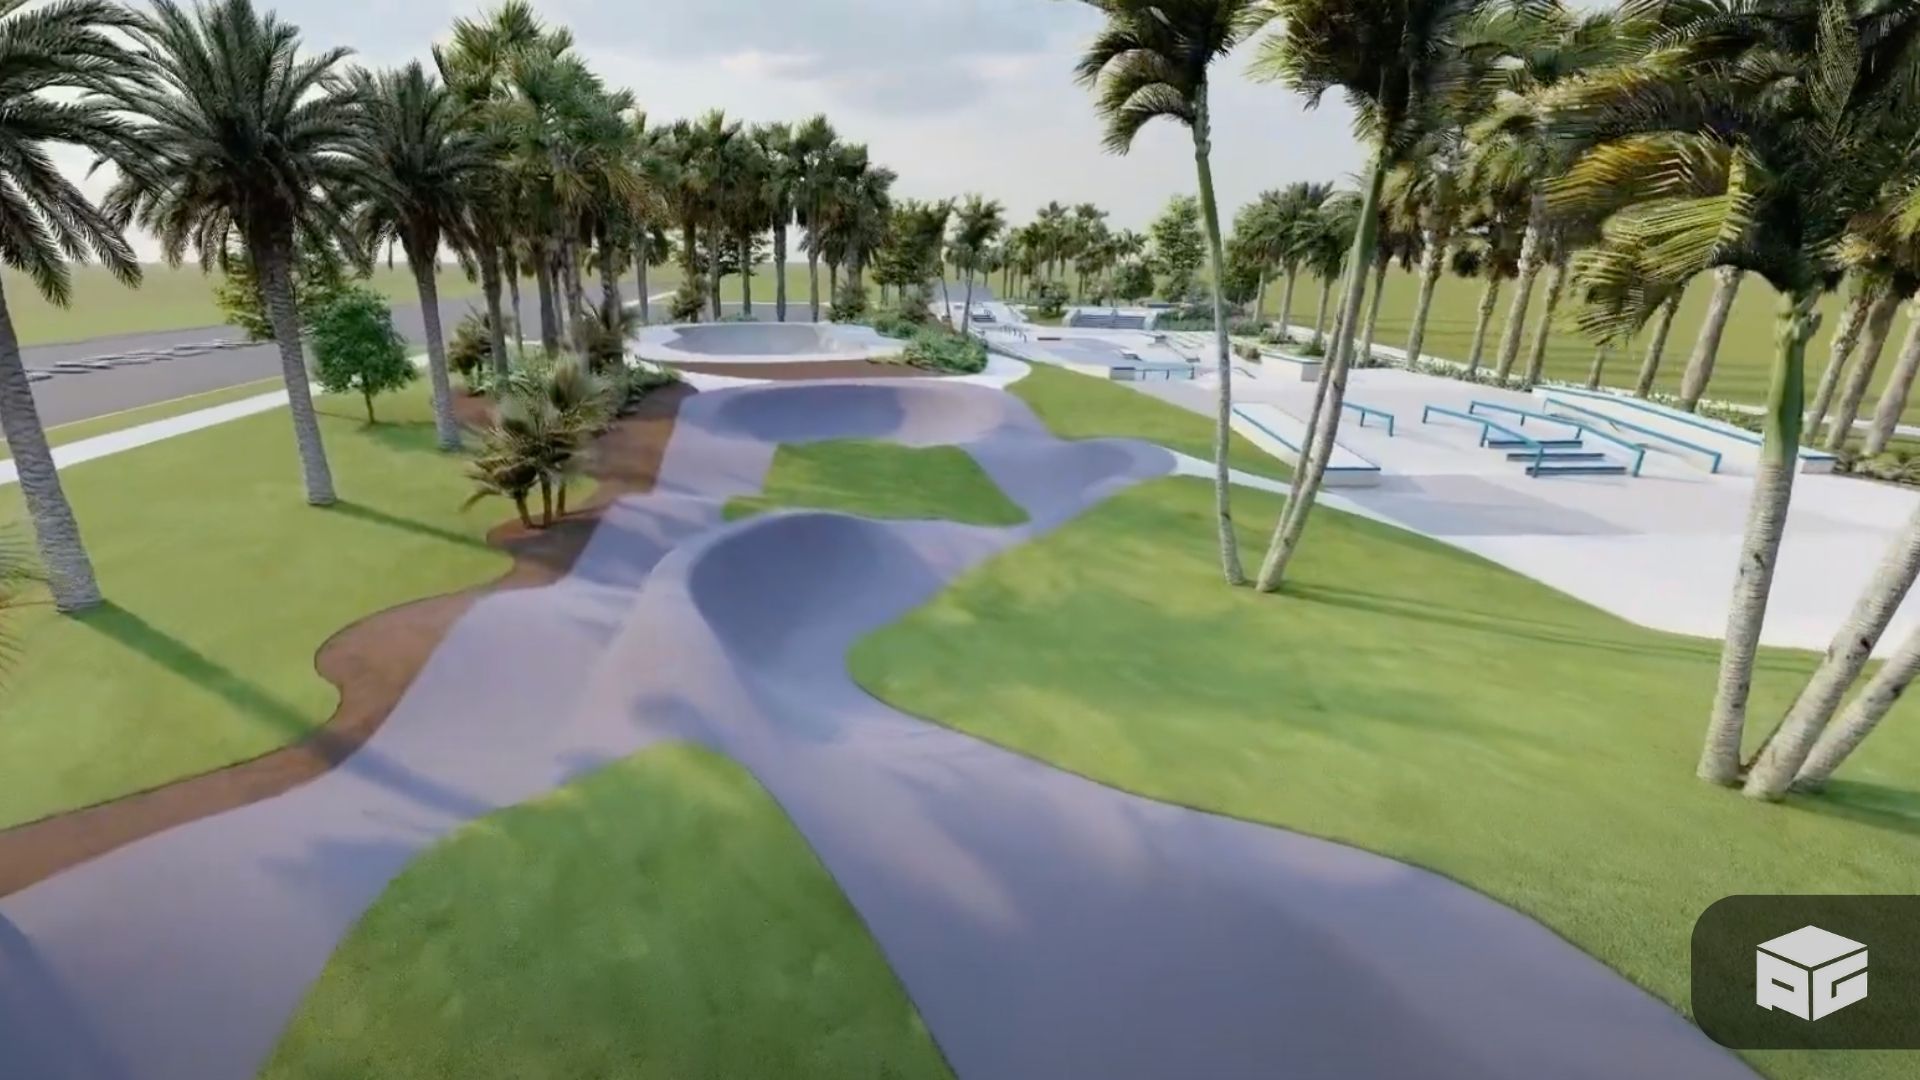 Skatepark Design for Marathon, Florida